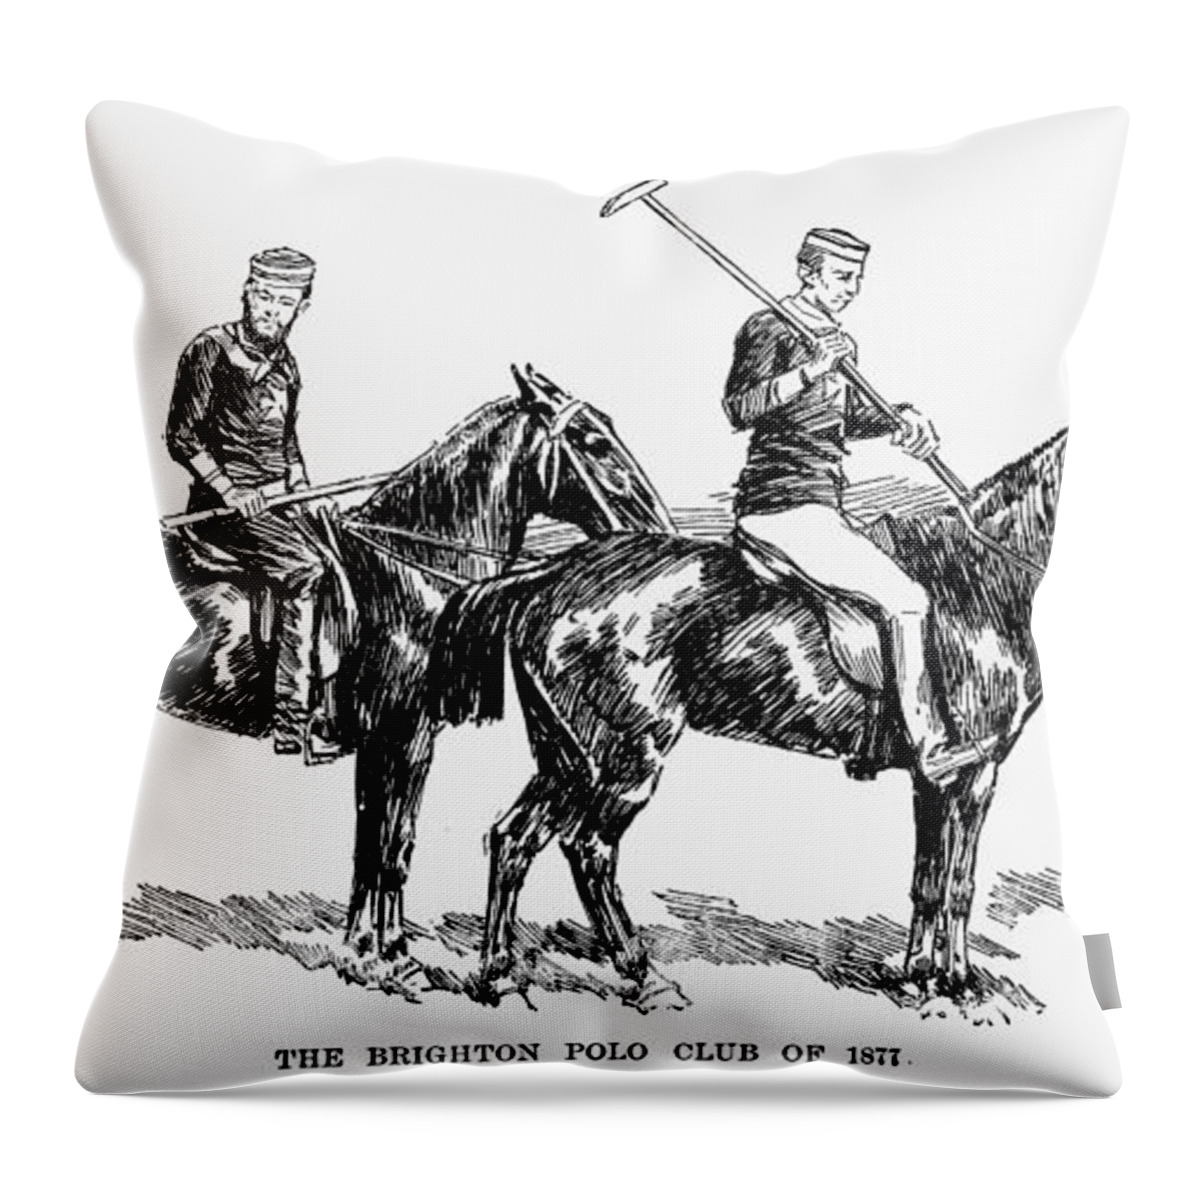 1877 Throw Pillow featuring the photograph Brighton Polo Club, 1877 by Granger